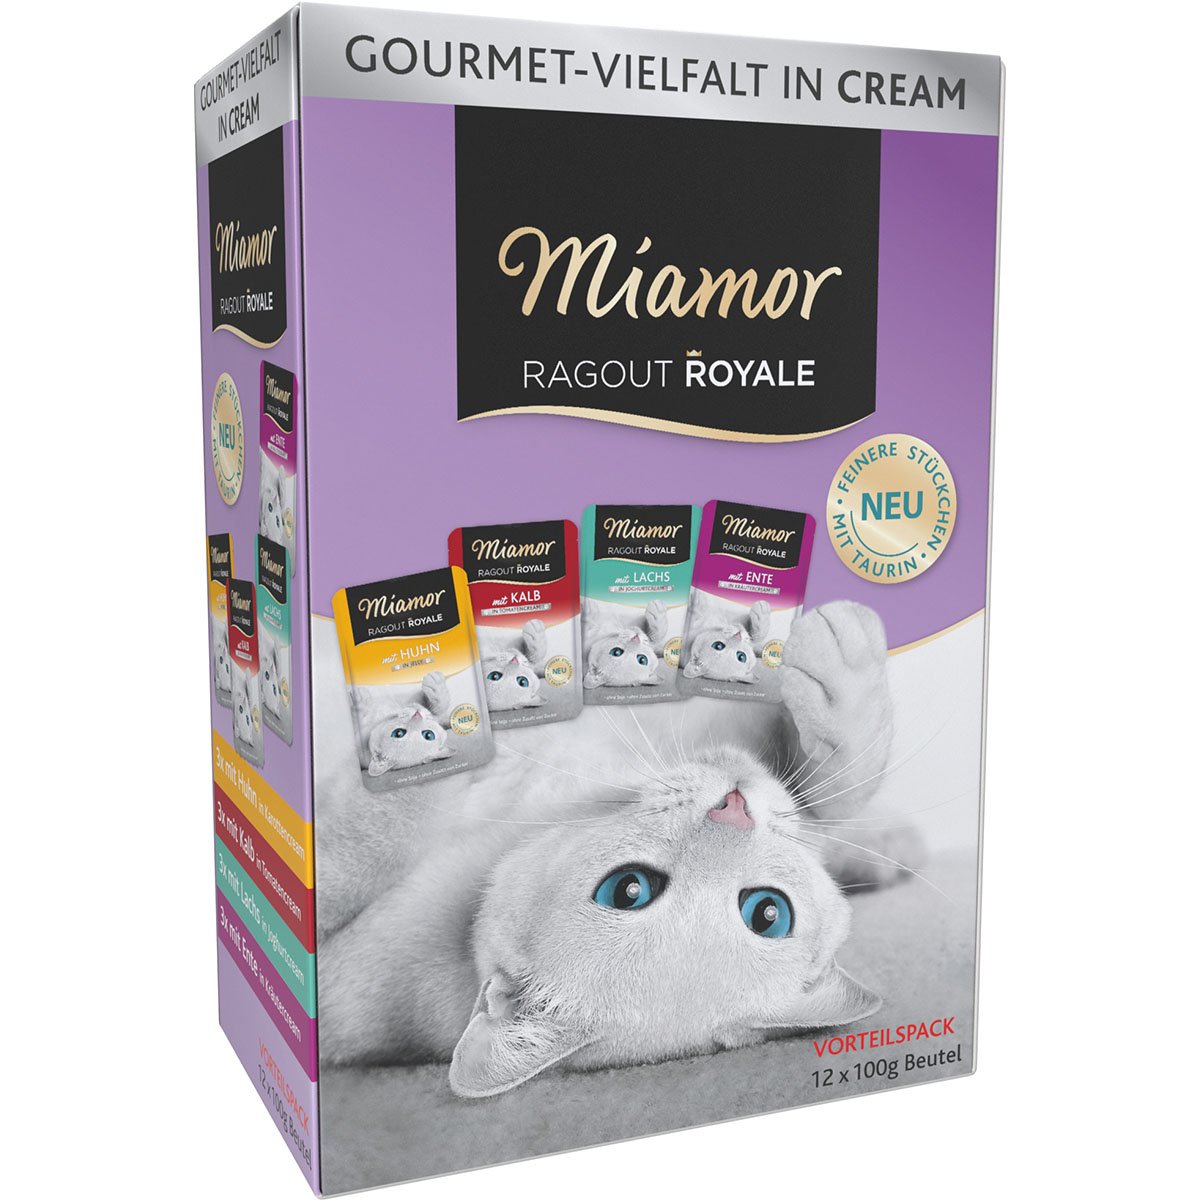 Miamor Ragout Royale Cream Vielfalt Multibox 60x100g von Miamor